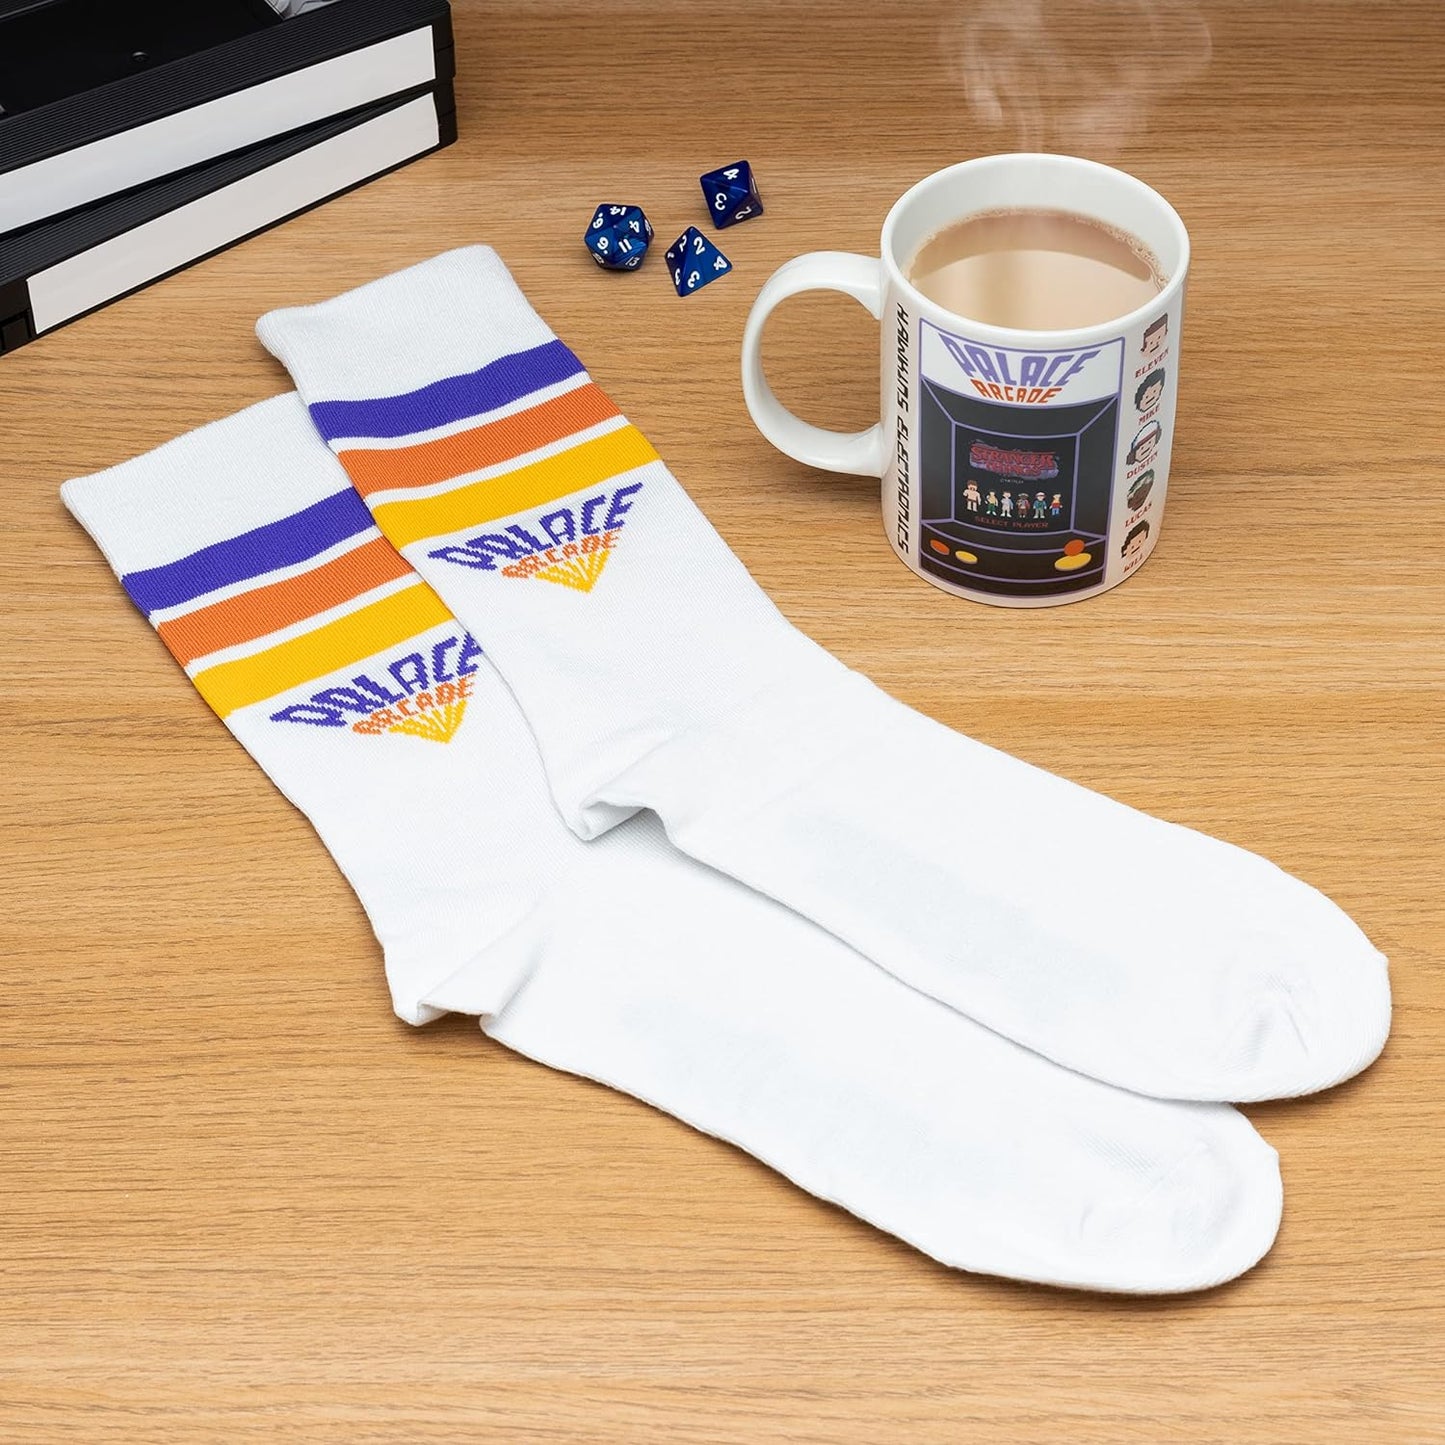 Stranger Things Mug and Socks Set - Zhivago Gifts